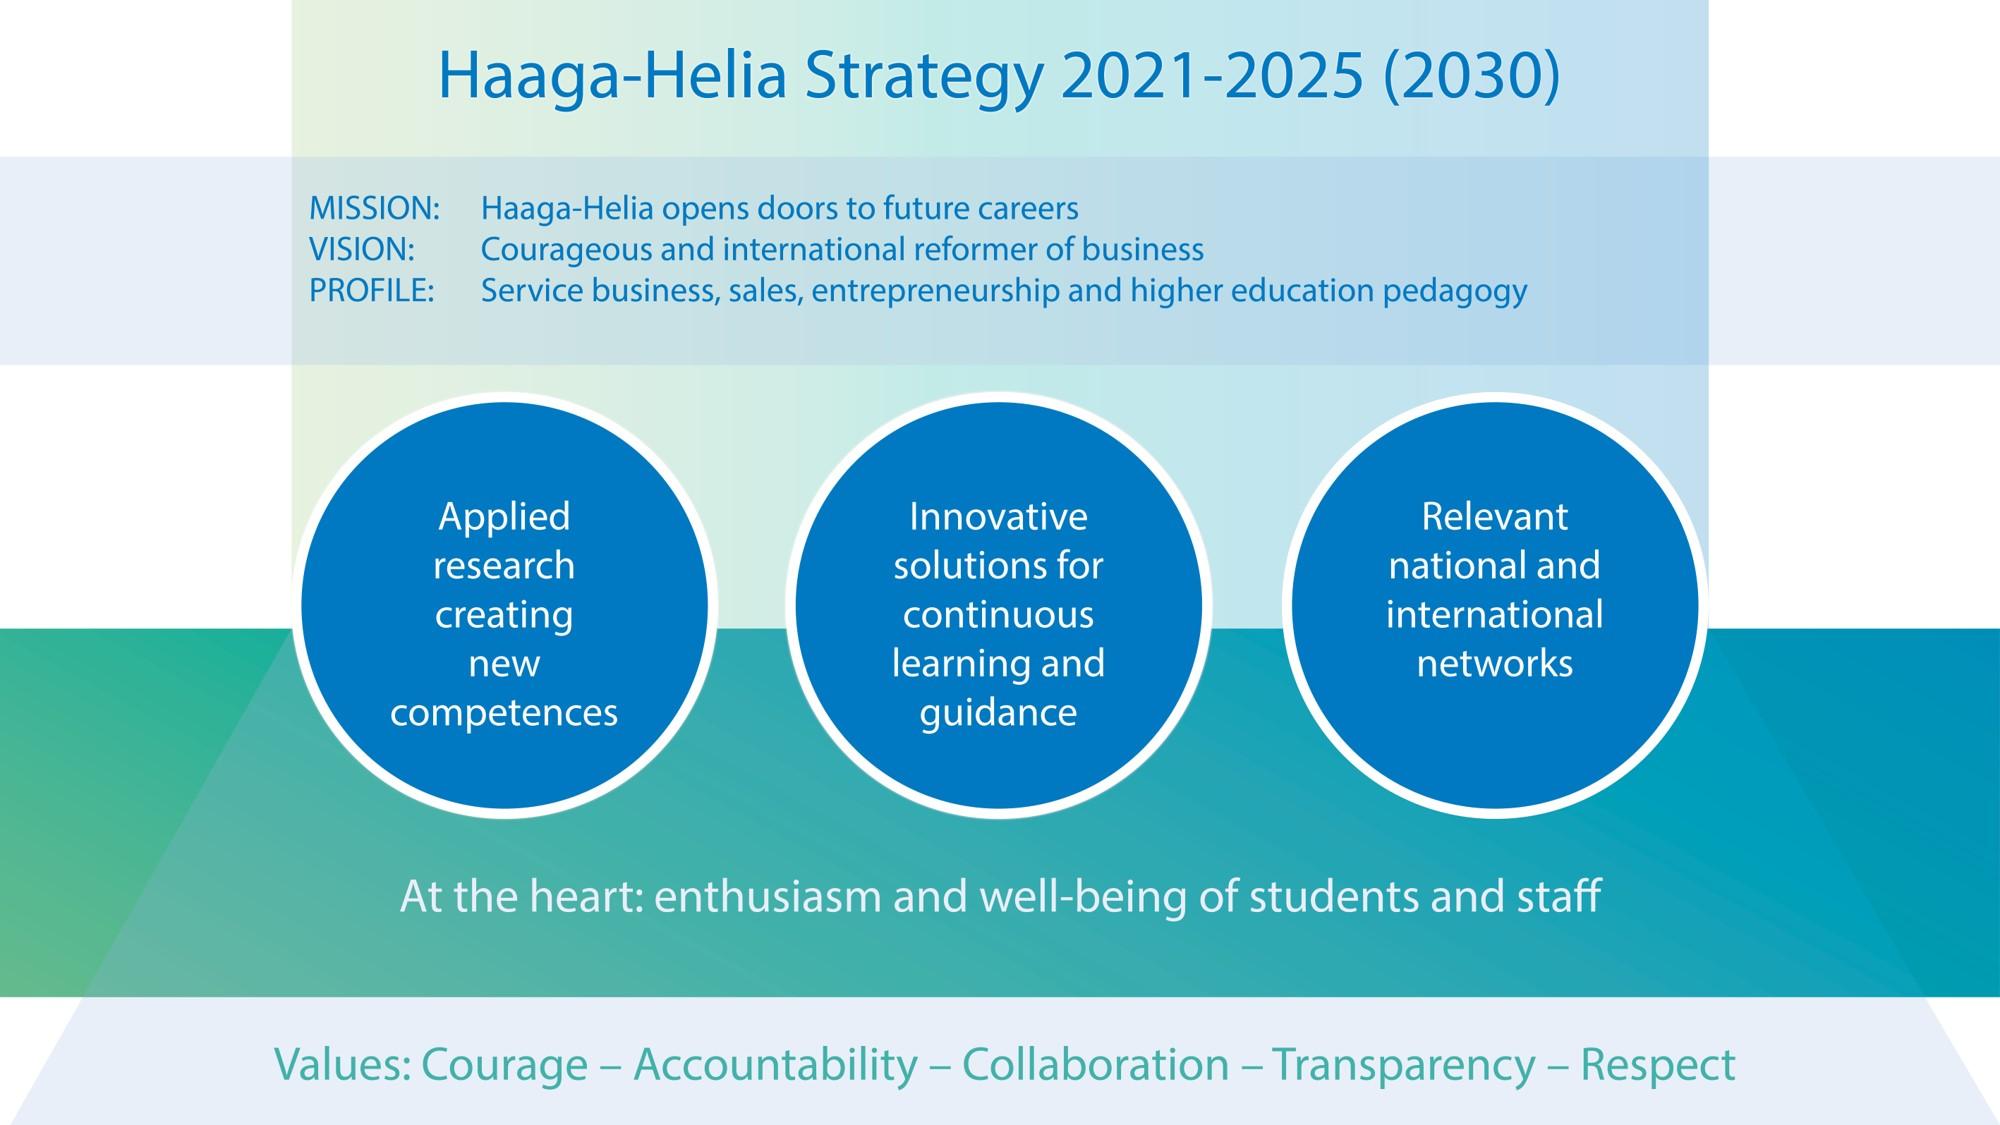 Picture 3. Haaga-Helia's strategy